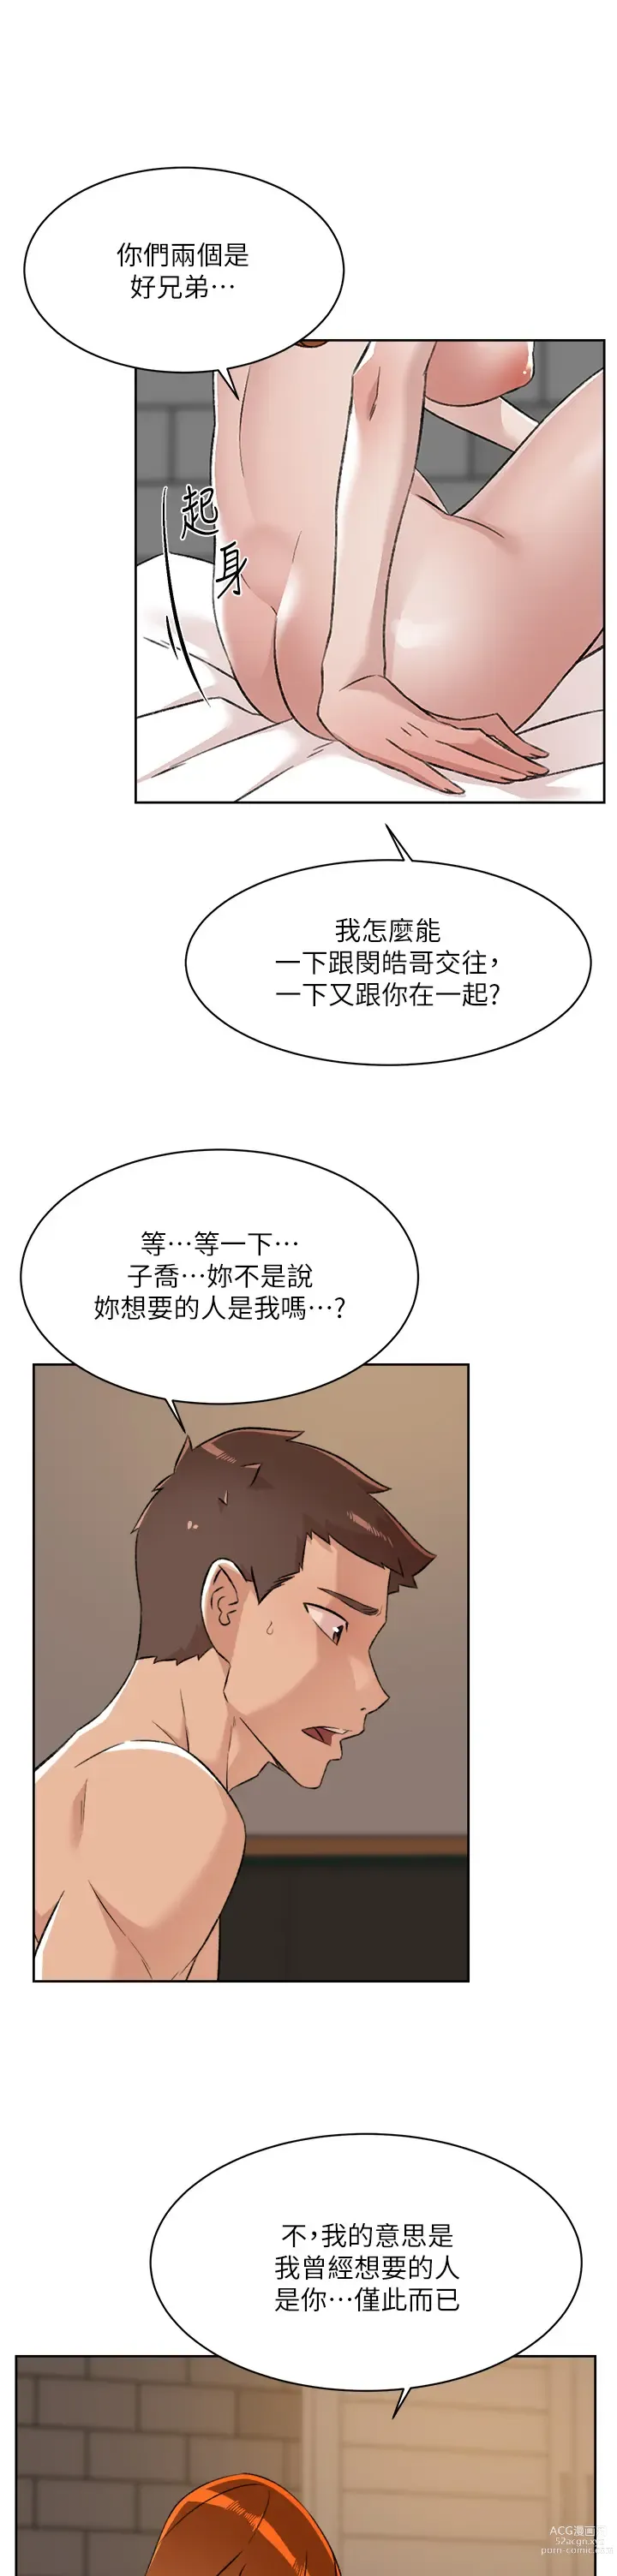 Page 982 of manga 好友的私生活